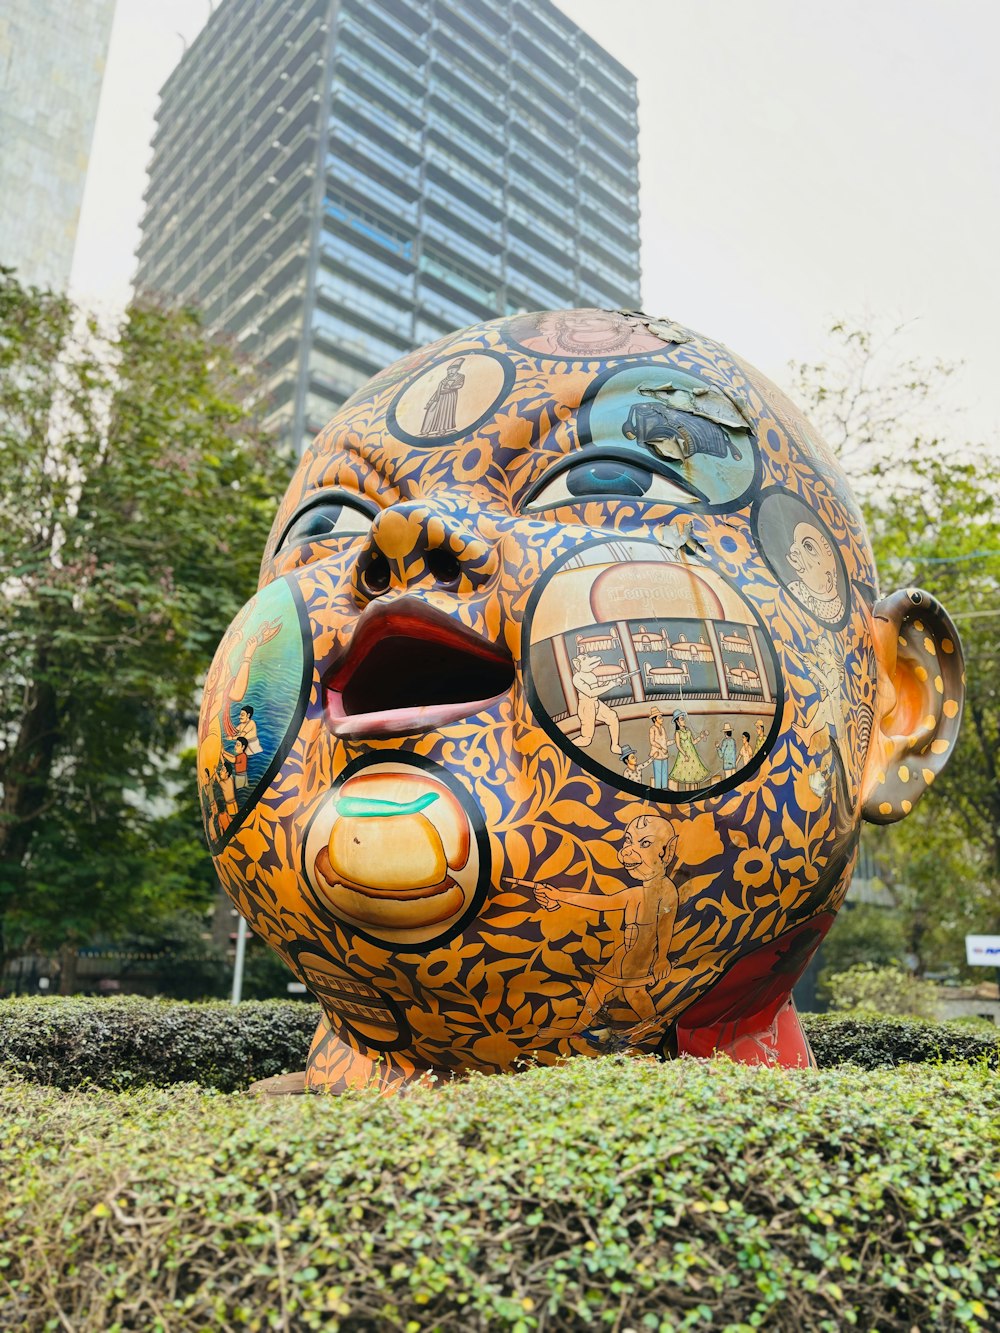 Una escultura de un rostro con un edificio al fondo